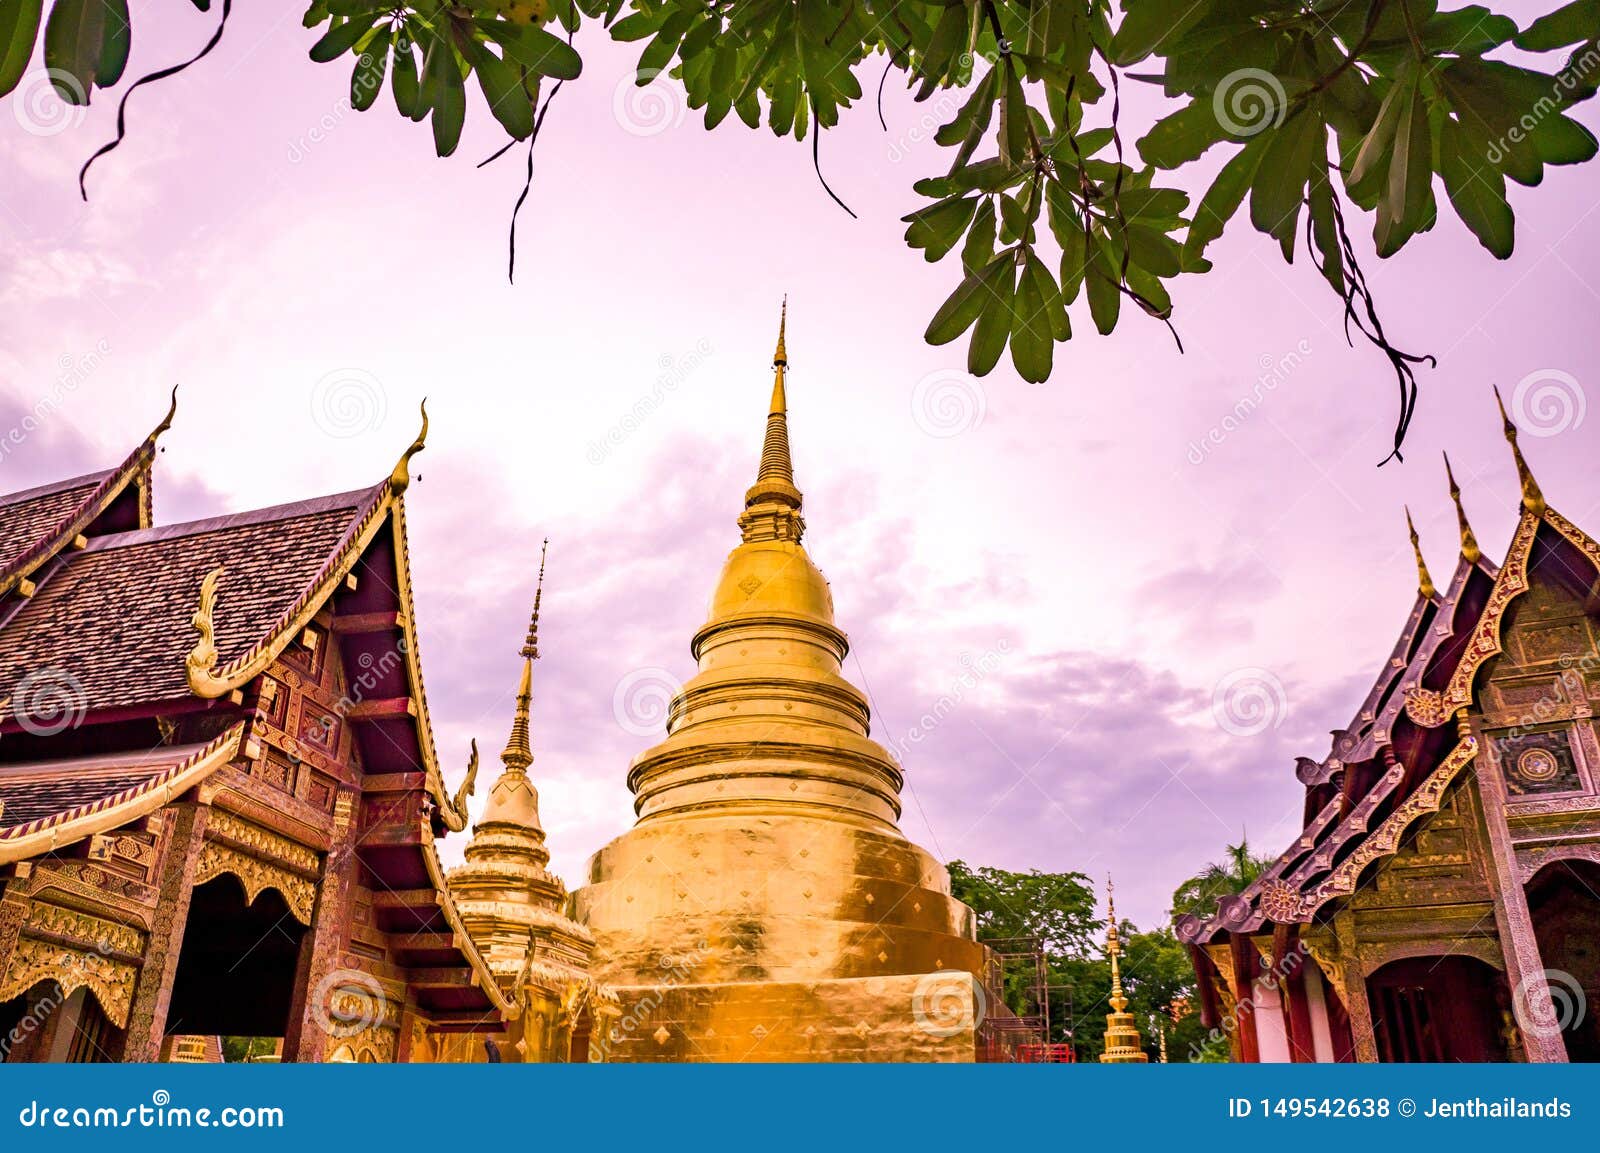 wat phra singh, phra singh temple  , chiang mai thailand